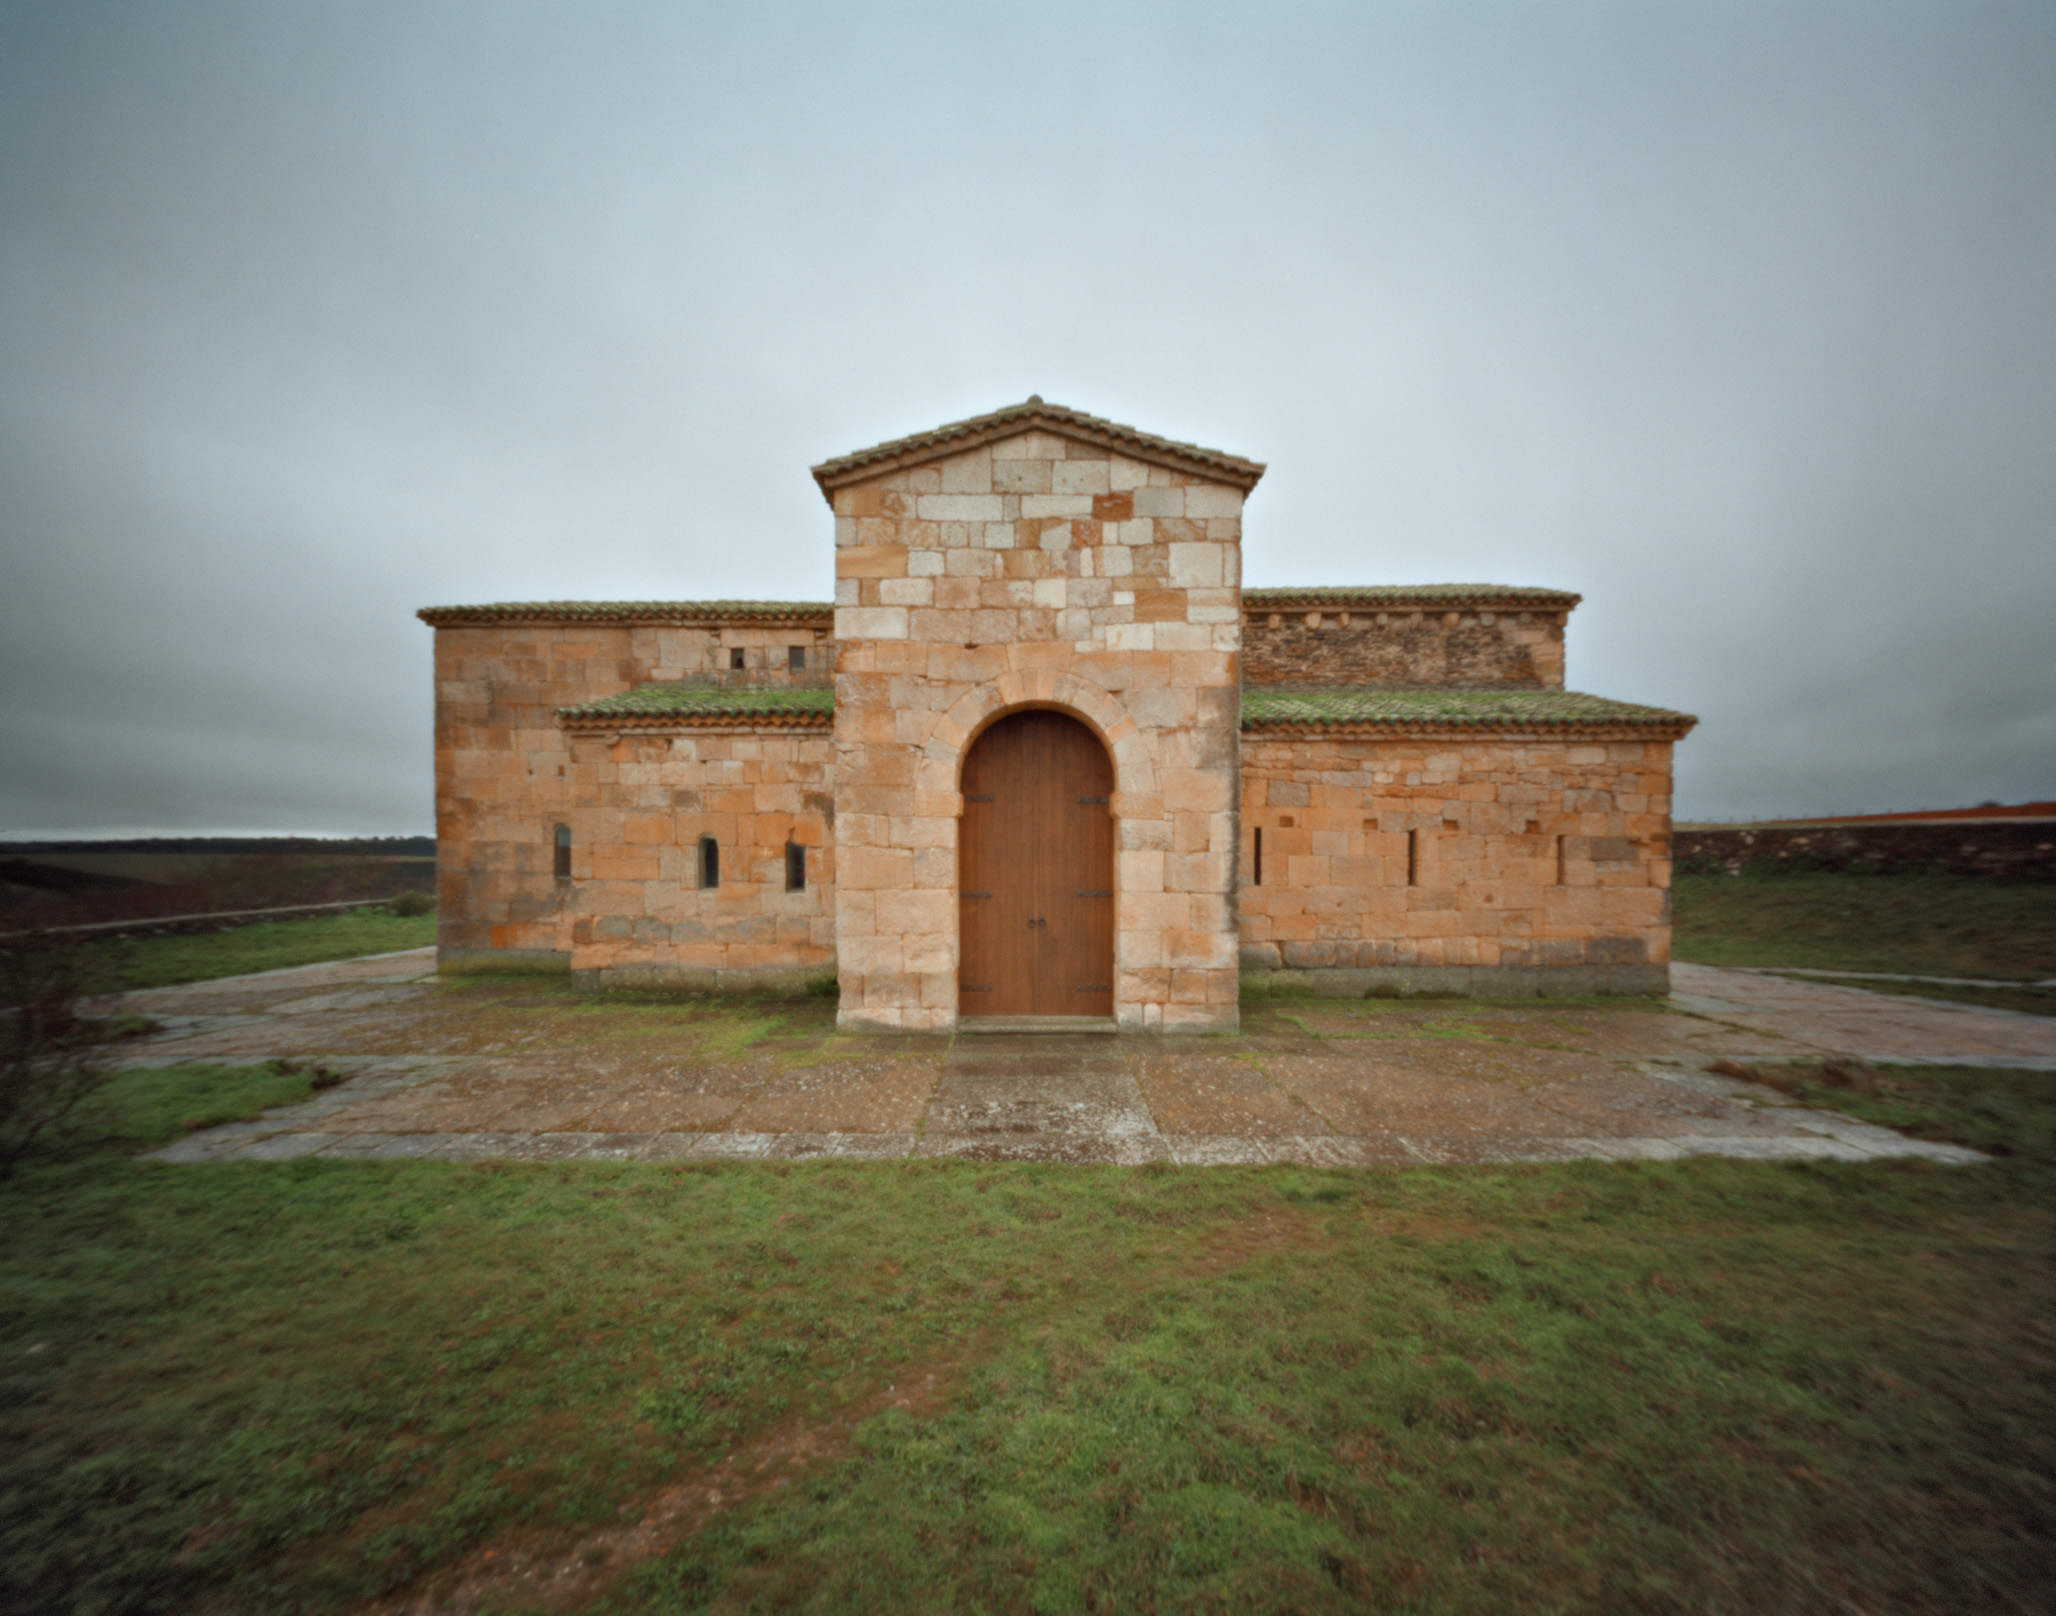 Visigothic hermitage in Spain